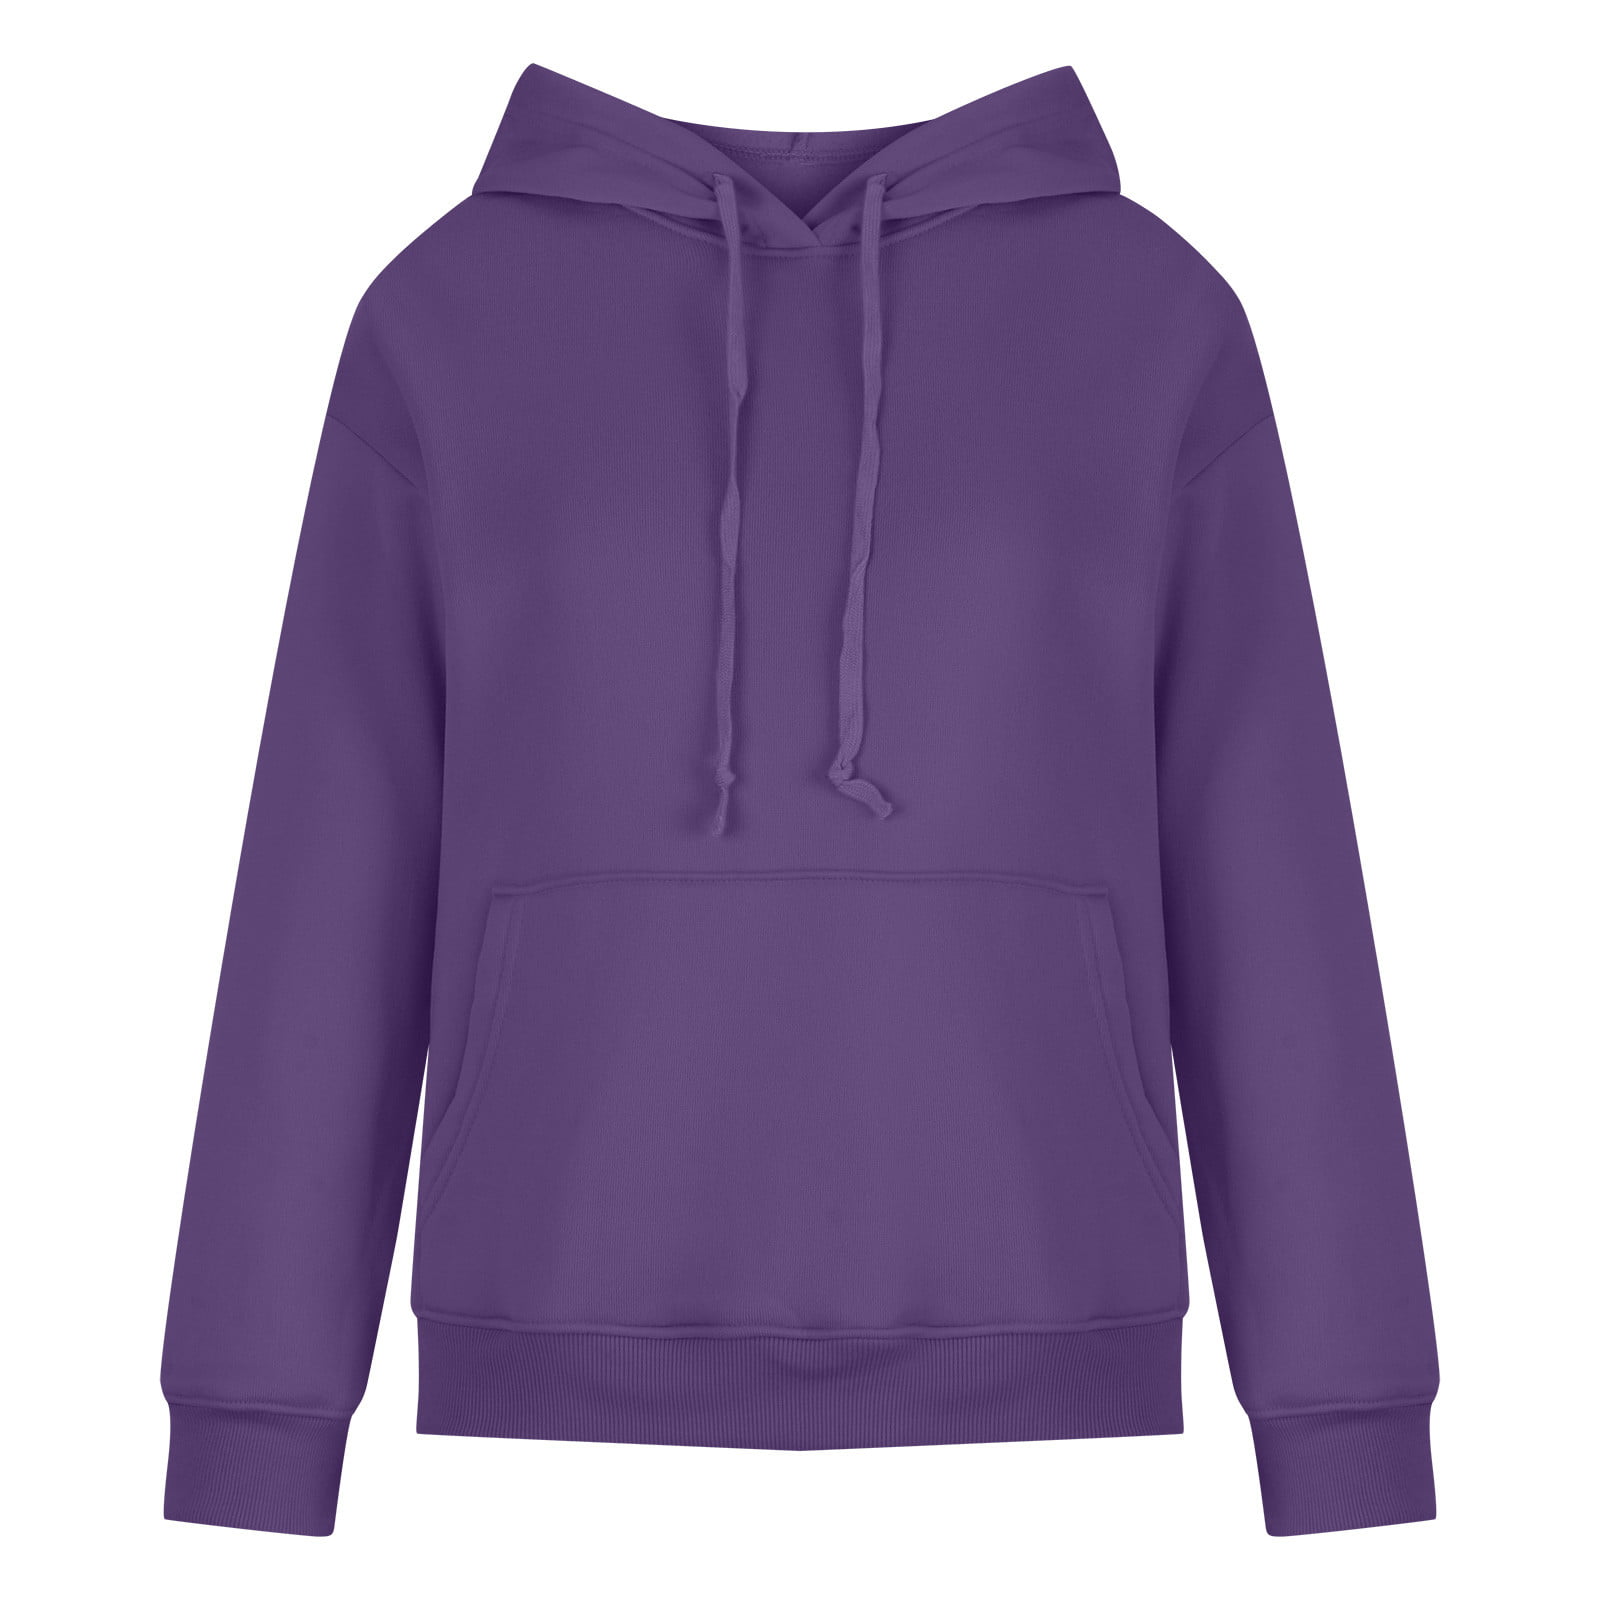 XFLWAM Womens Casual Hoodies Crew Neck Long Sleeve Sweatshirts With Pocket  Lightweight Drawstring Pullover Tops Light Purple XXL 